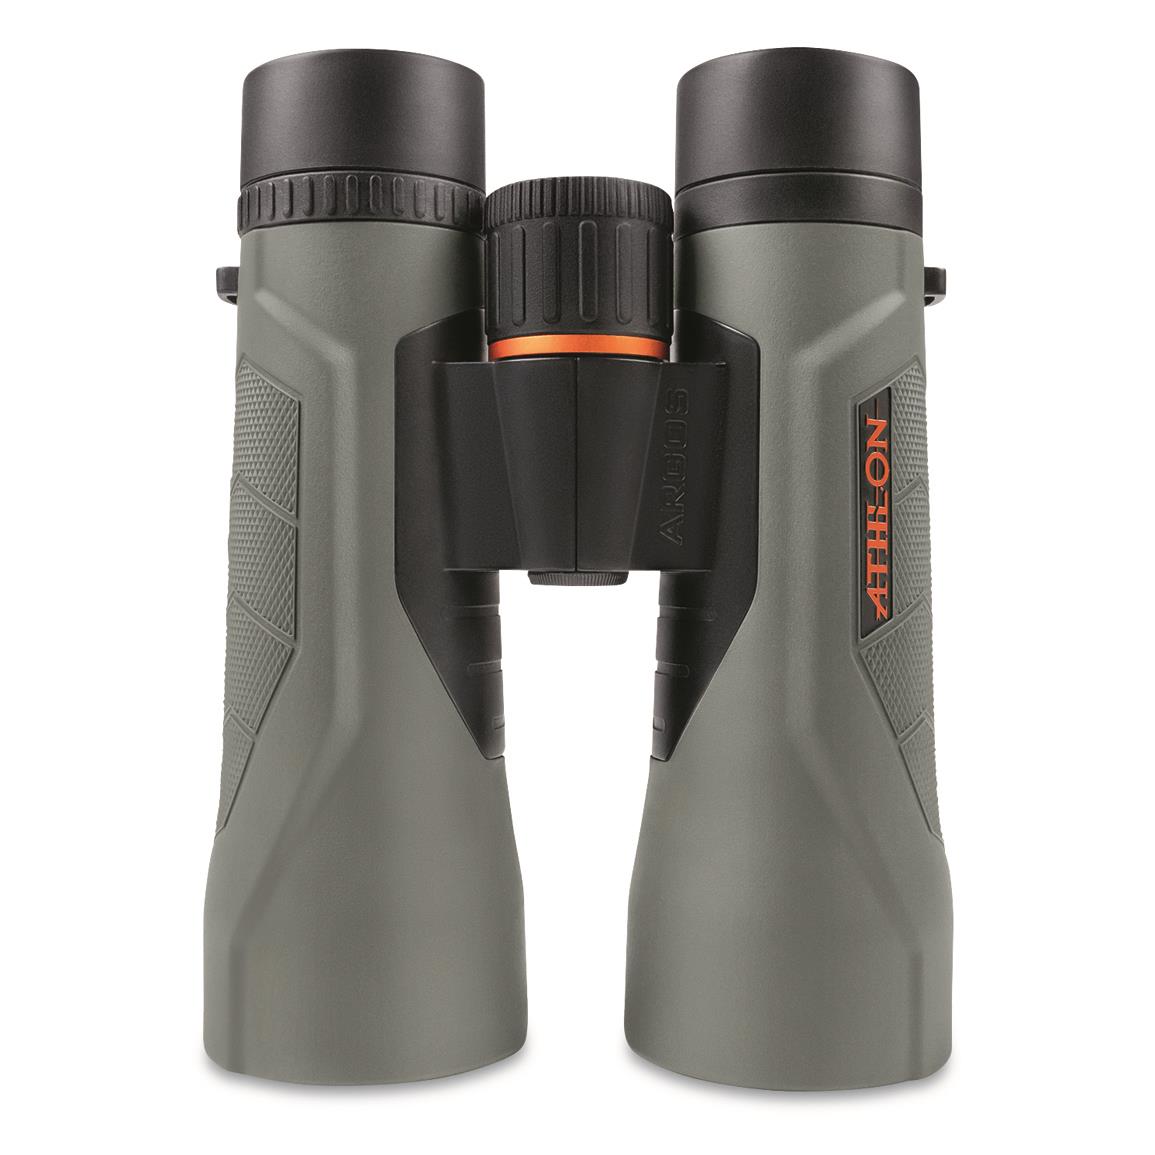 Athlon Argos G2 HD 12x50mm Binoculars